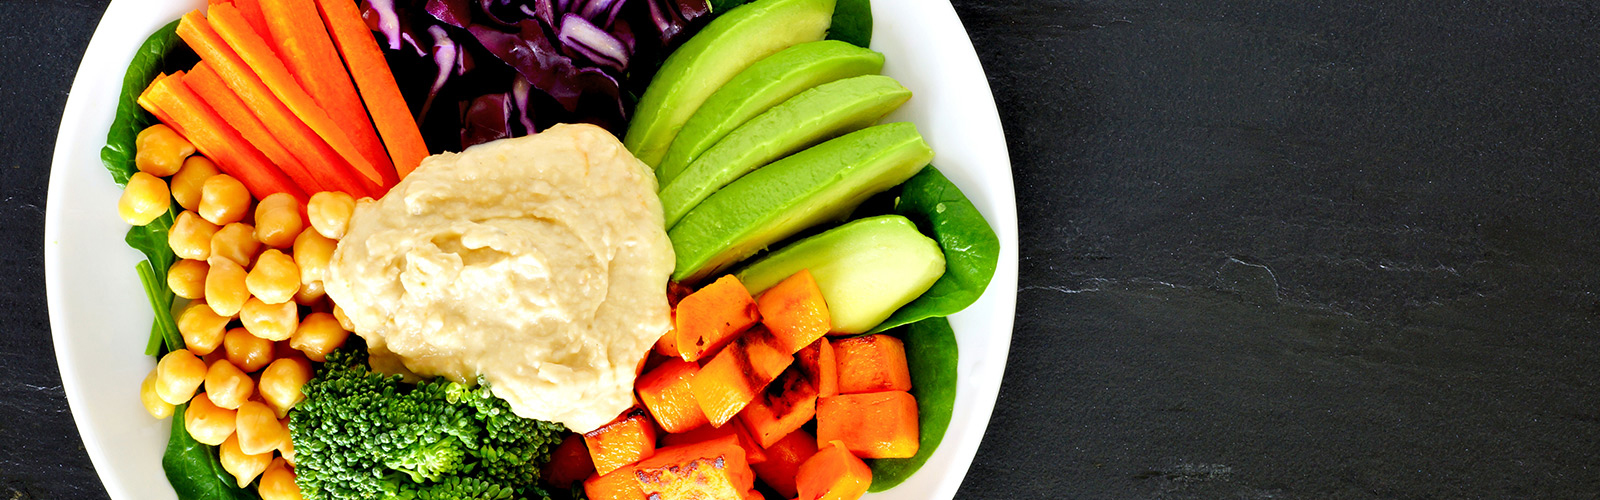 plates of veggies and hummus